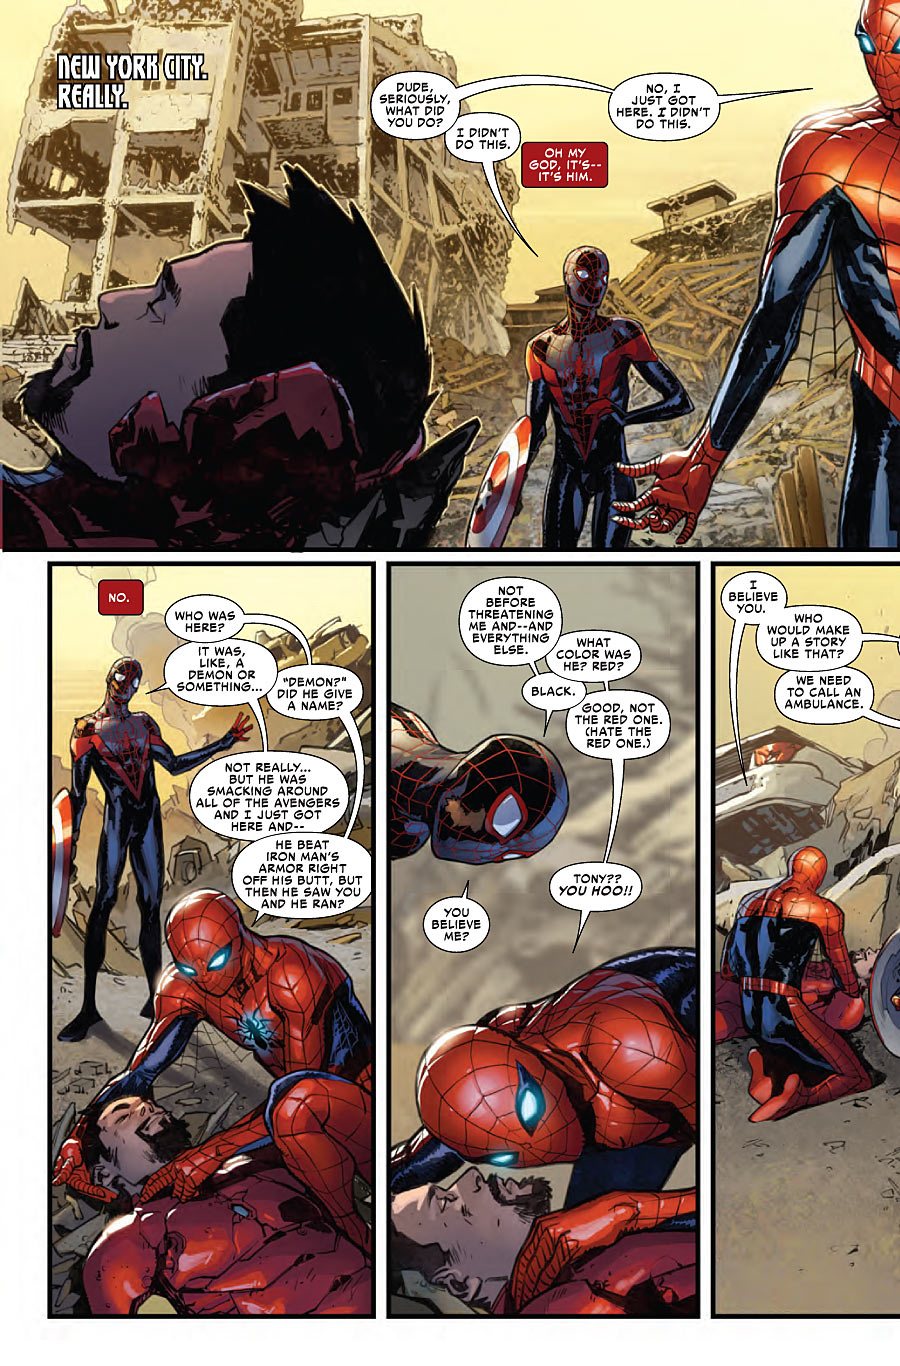 Spider-Man panels from Marvel Comics